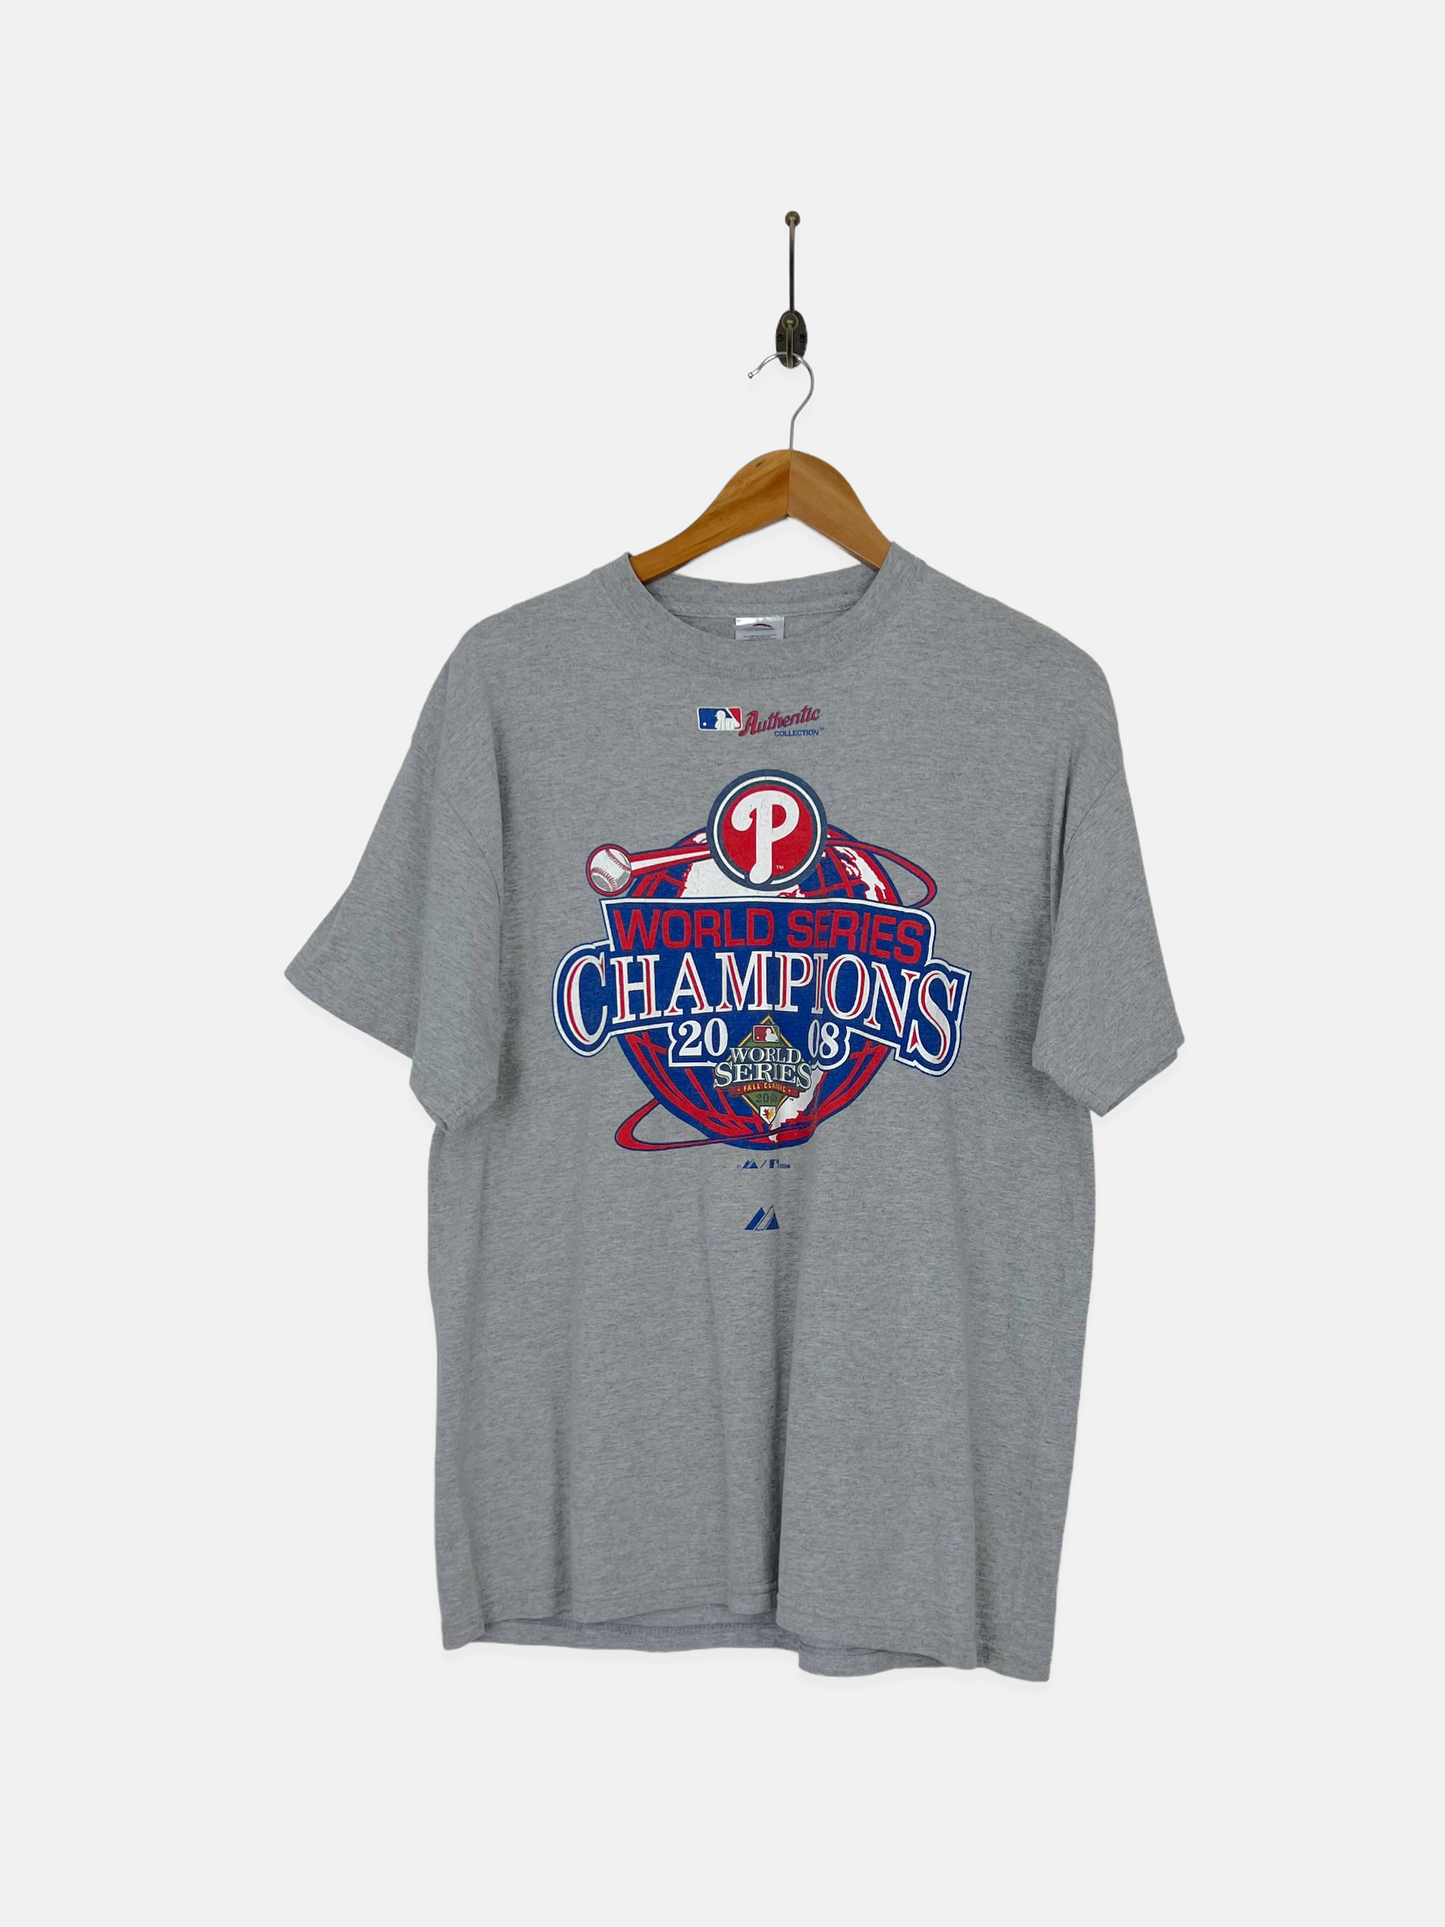 Philadelphia Phillies MLB Vintage T-Shirt Size M